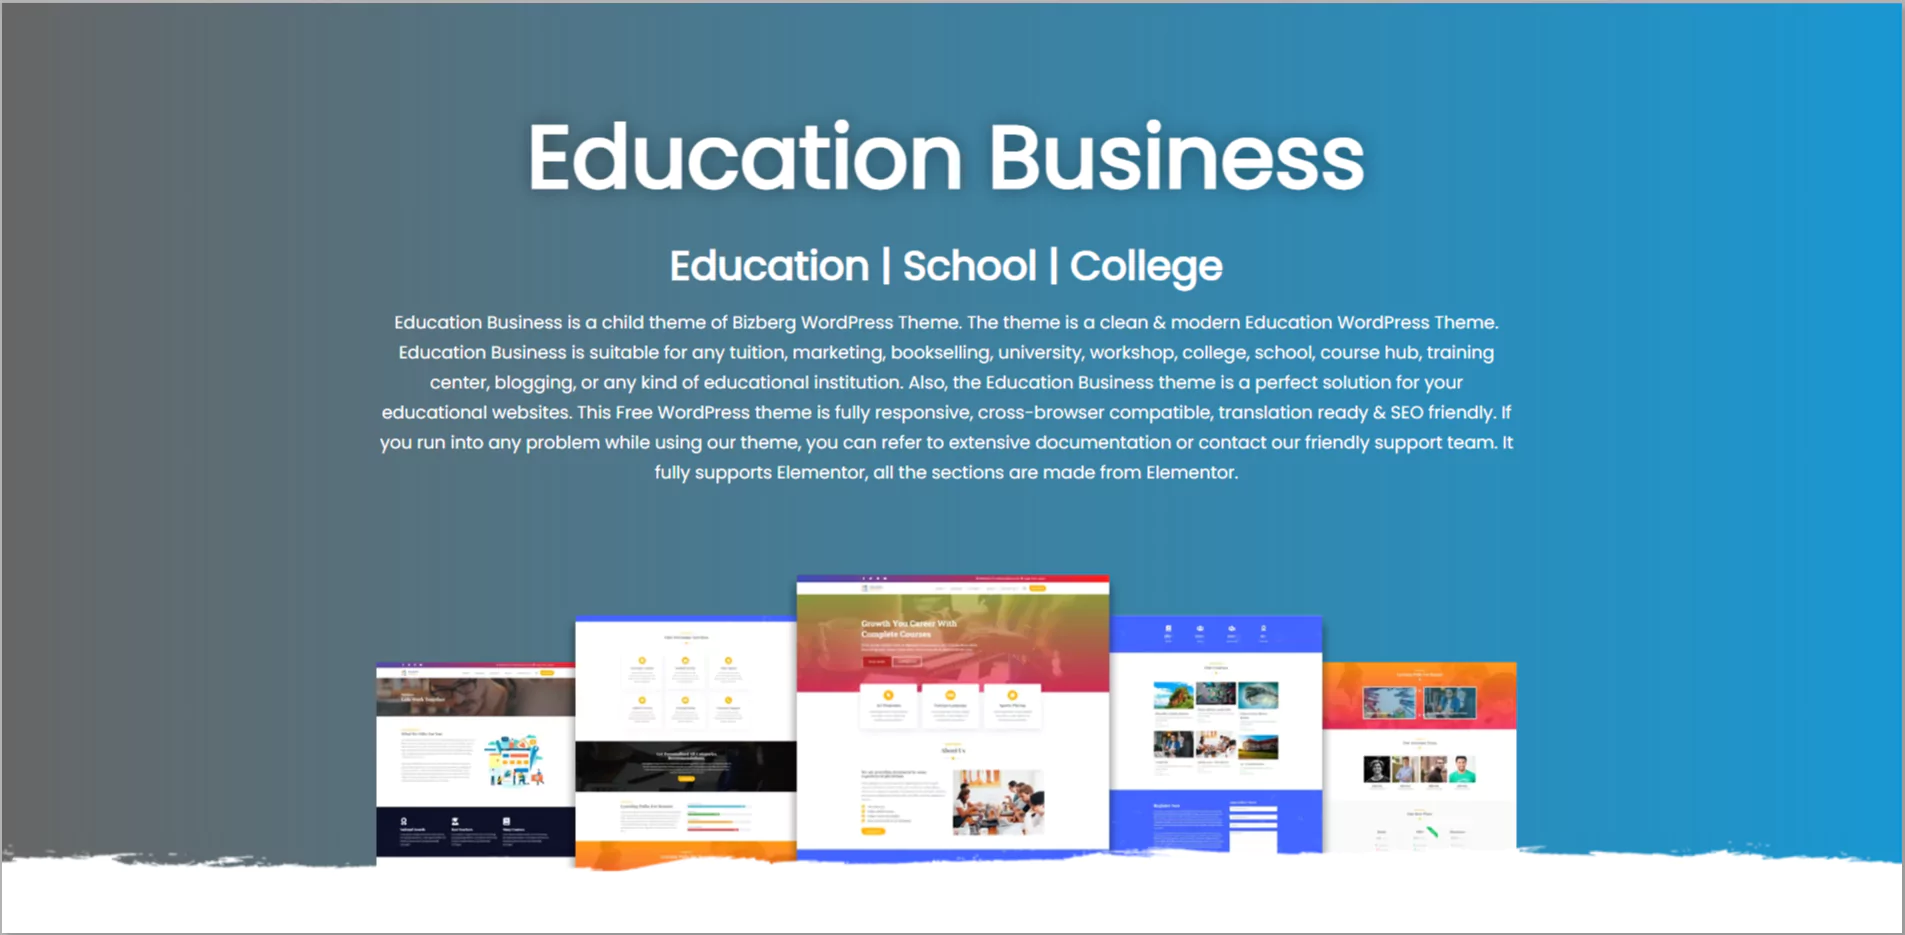 Education Business theme